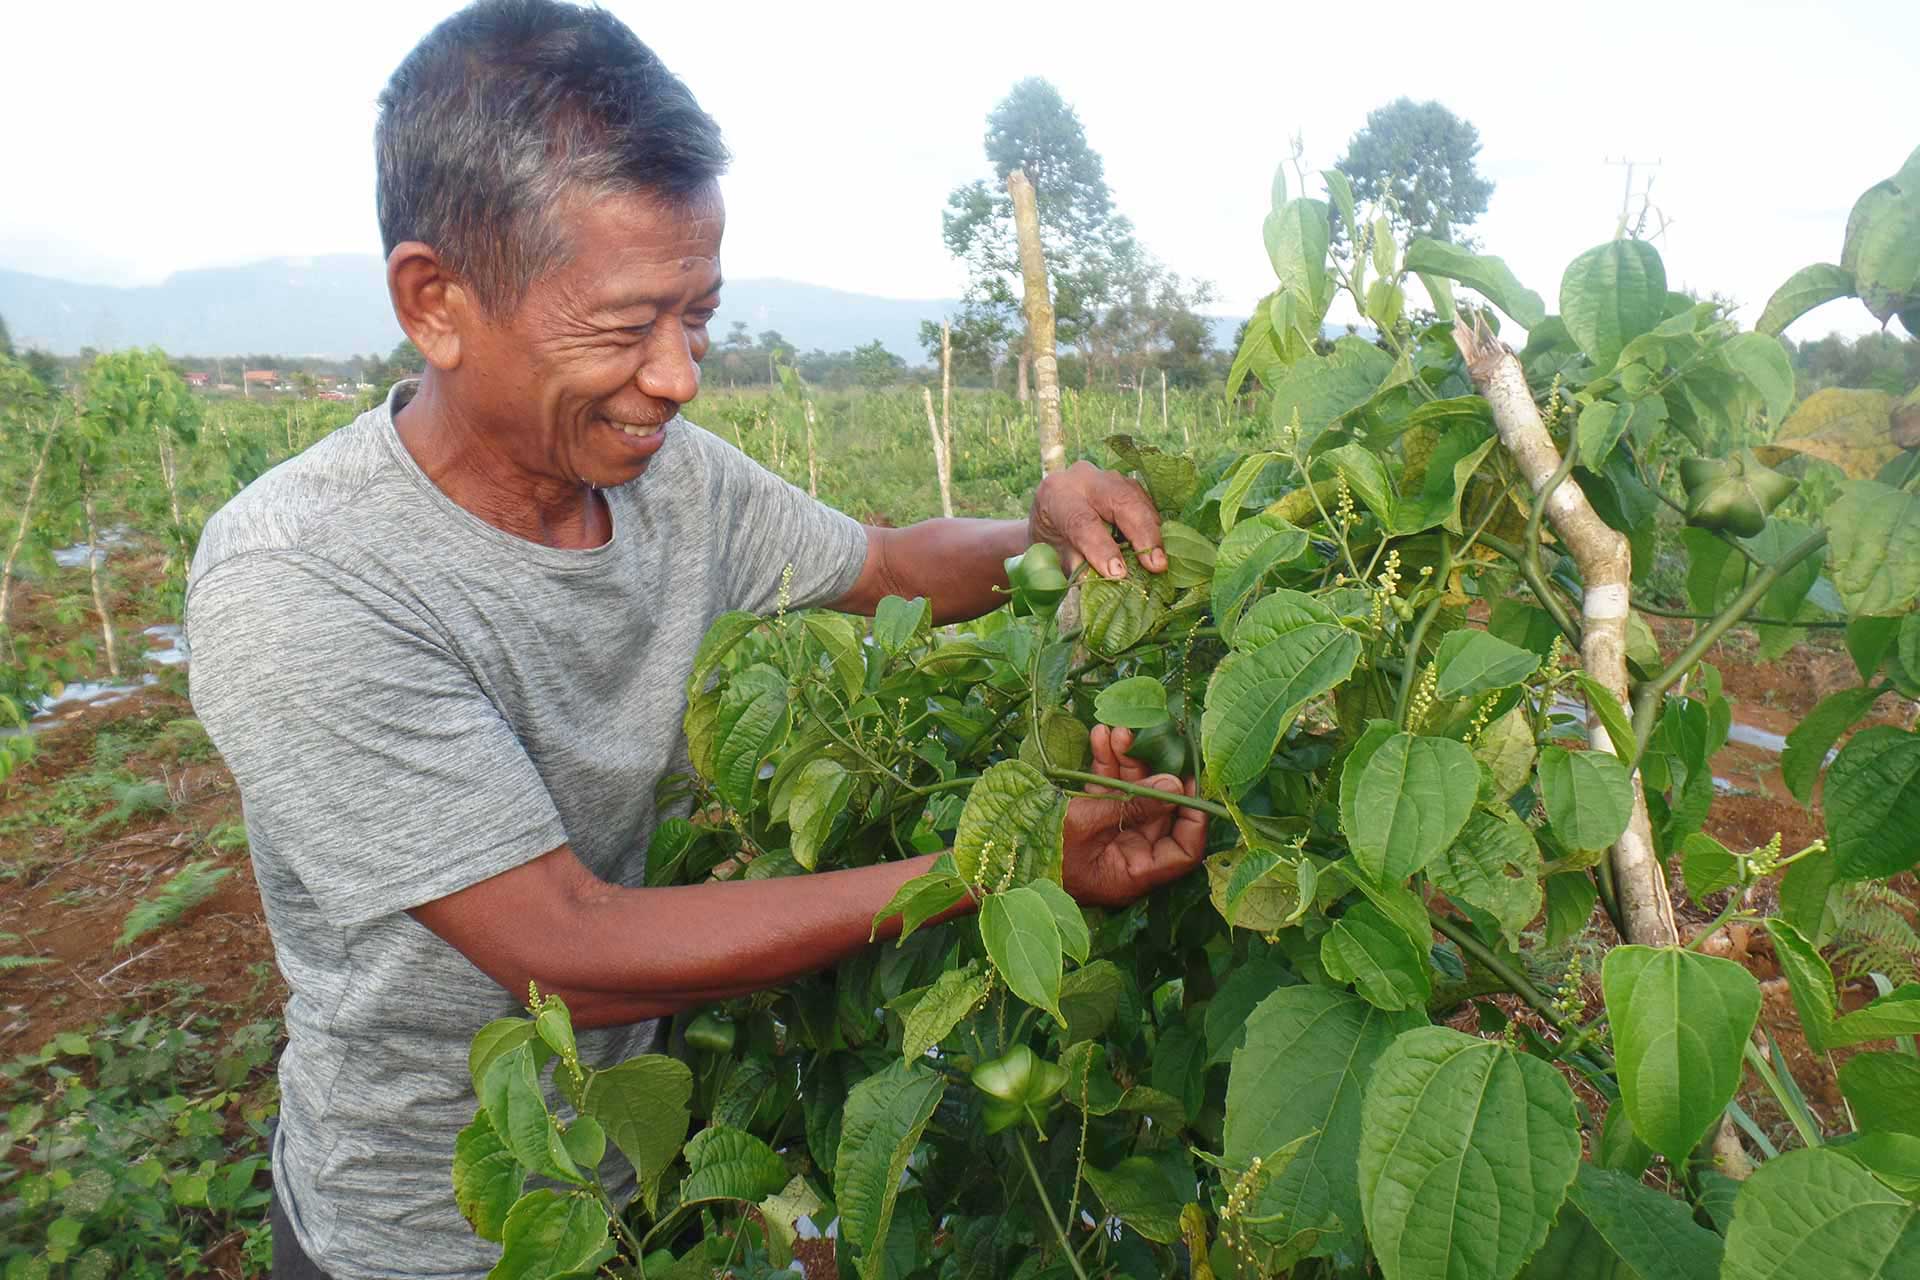 Lao man tending his crops